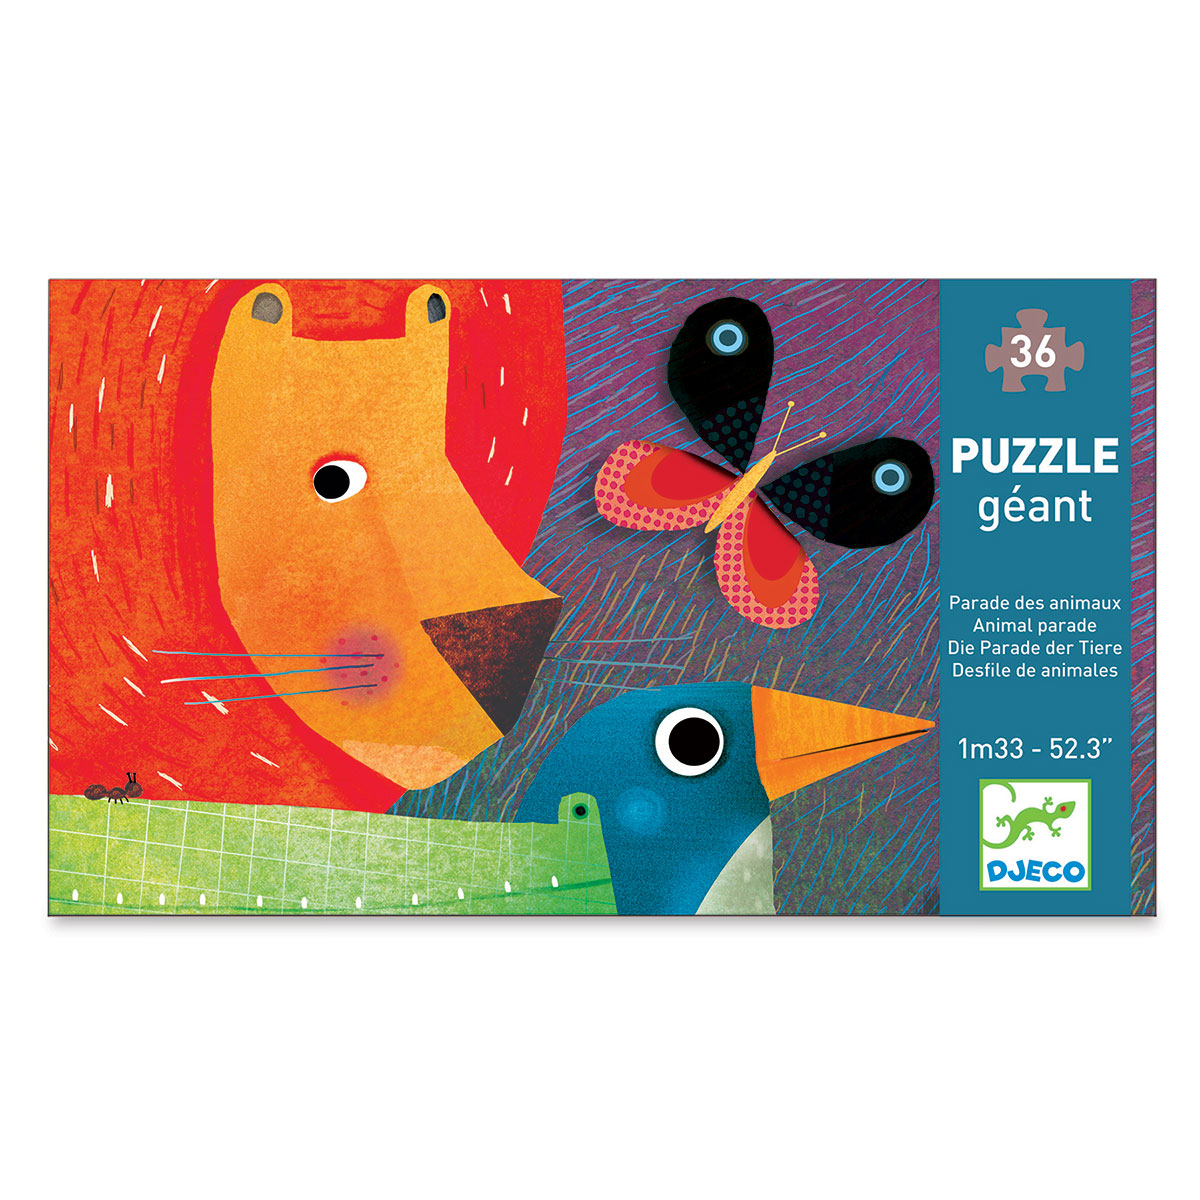 4 puzzles : Dans la jungle Djeco-07135 18 pièces Puzzles - Djeco